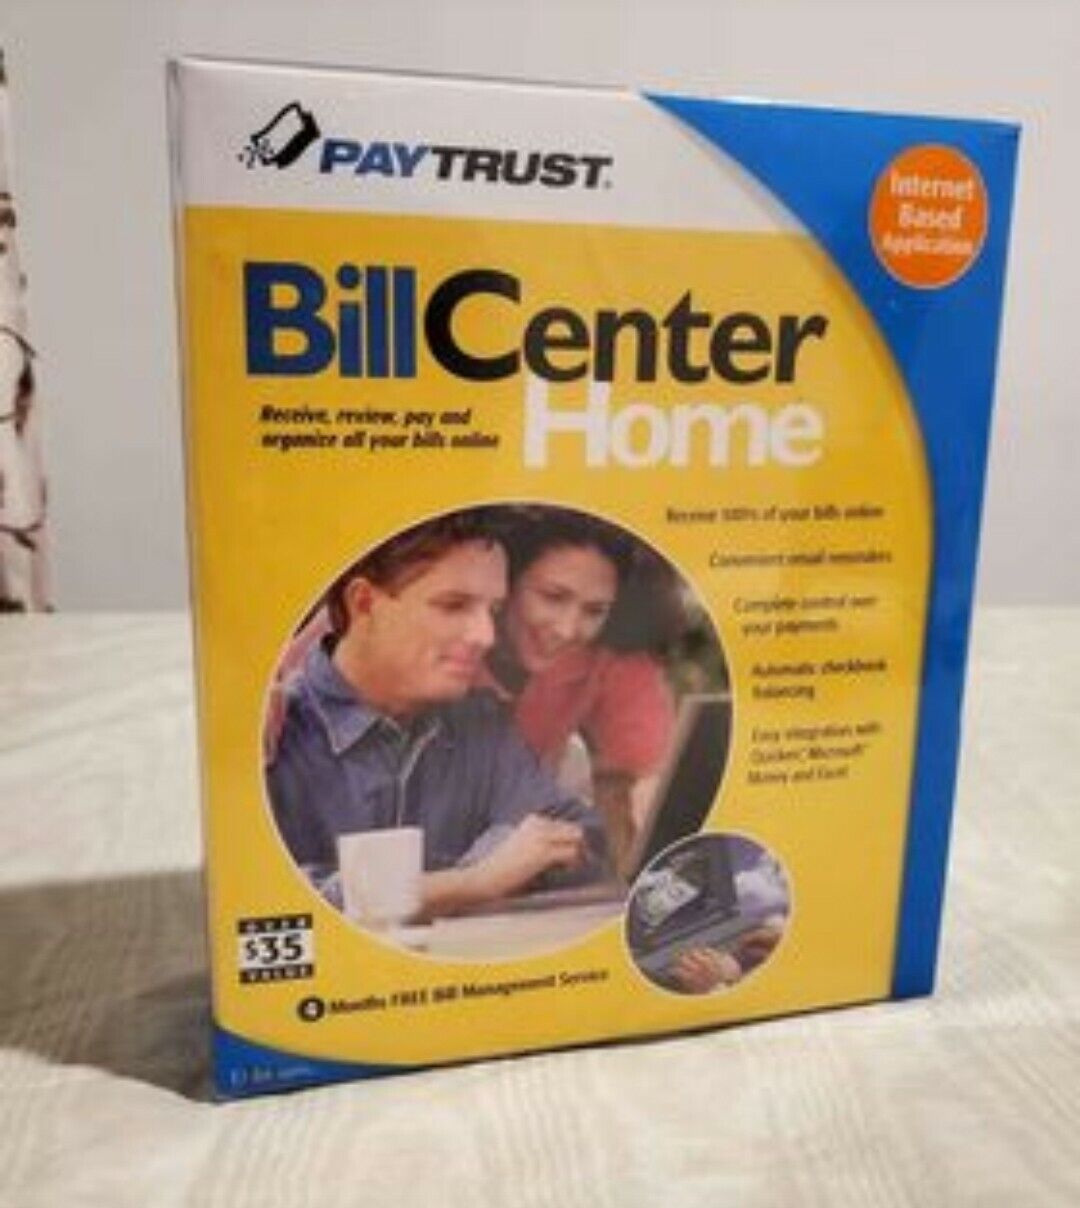 Bill Center Home (Online Bill Management service) Windows 95/98/Me/NT/2000